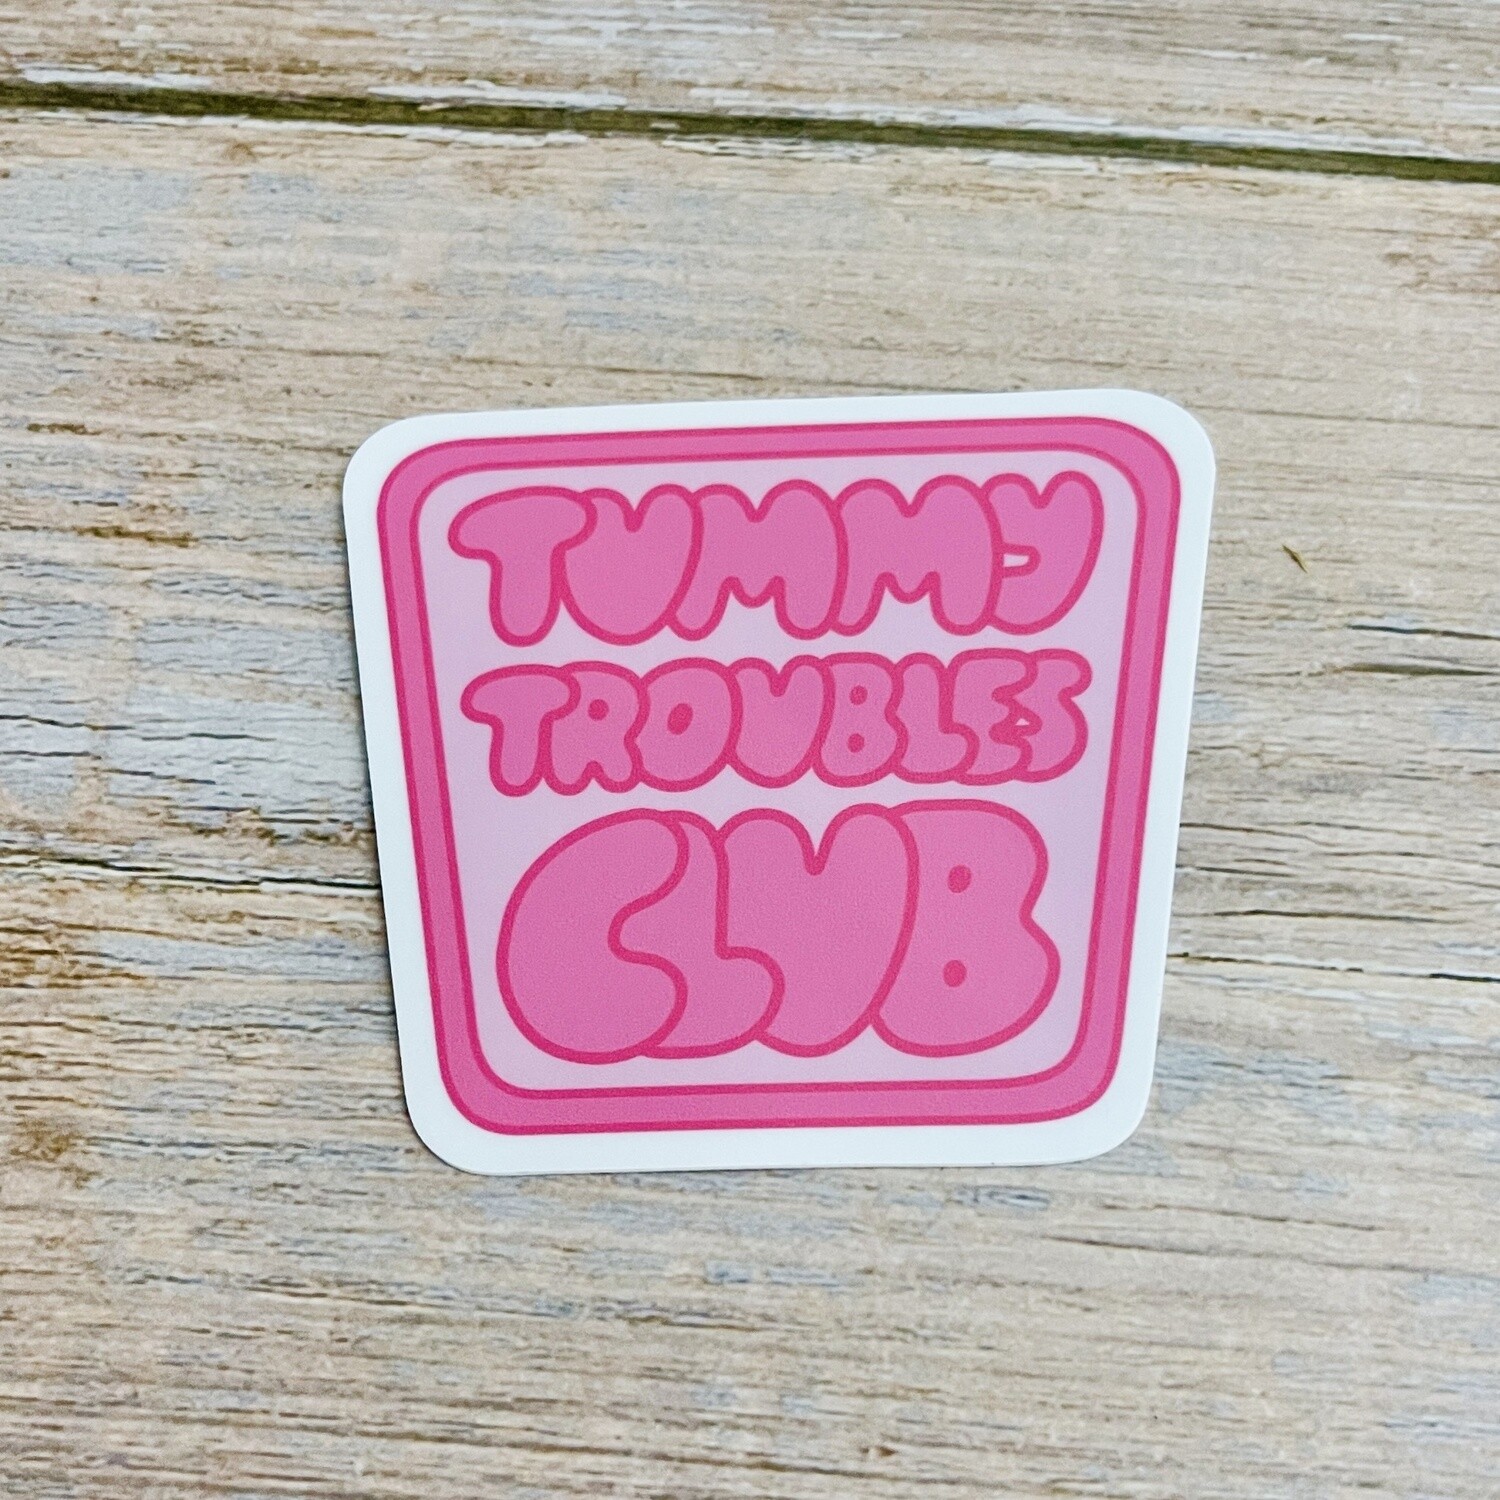 Tummy Troubles Club Sticker